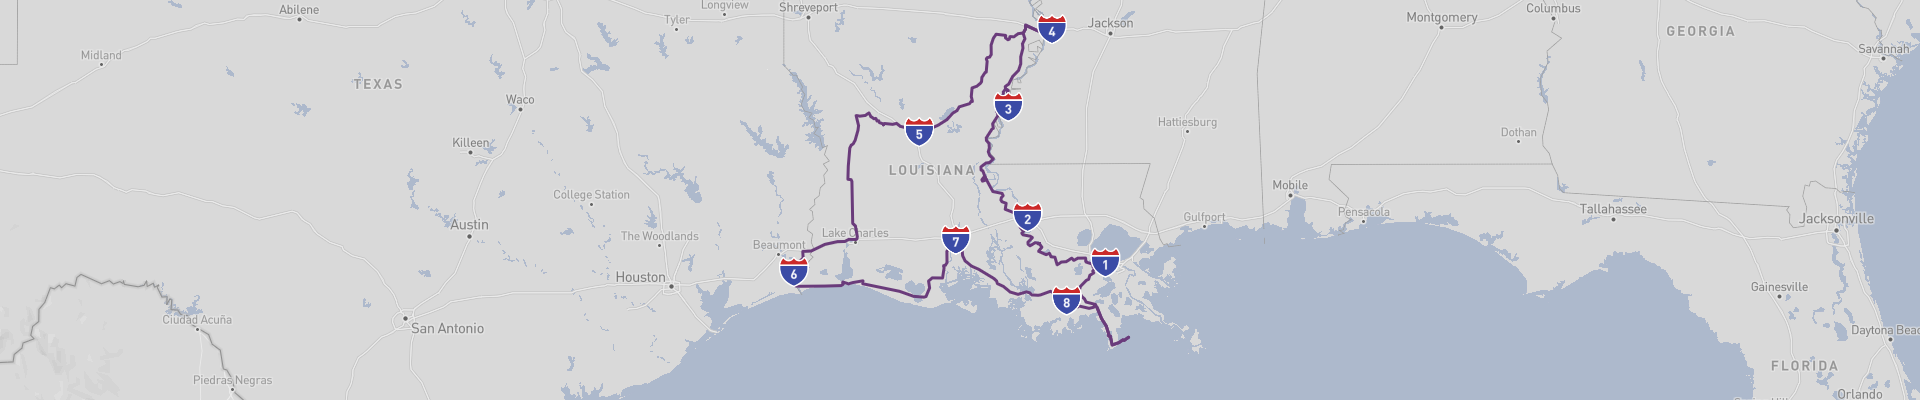 Louisiana Road Trip